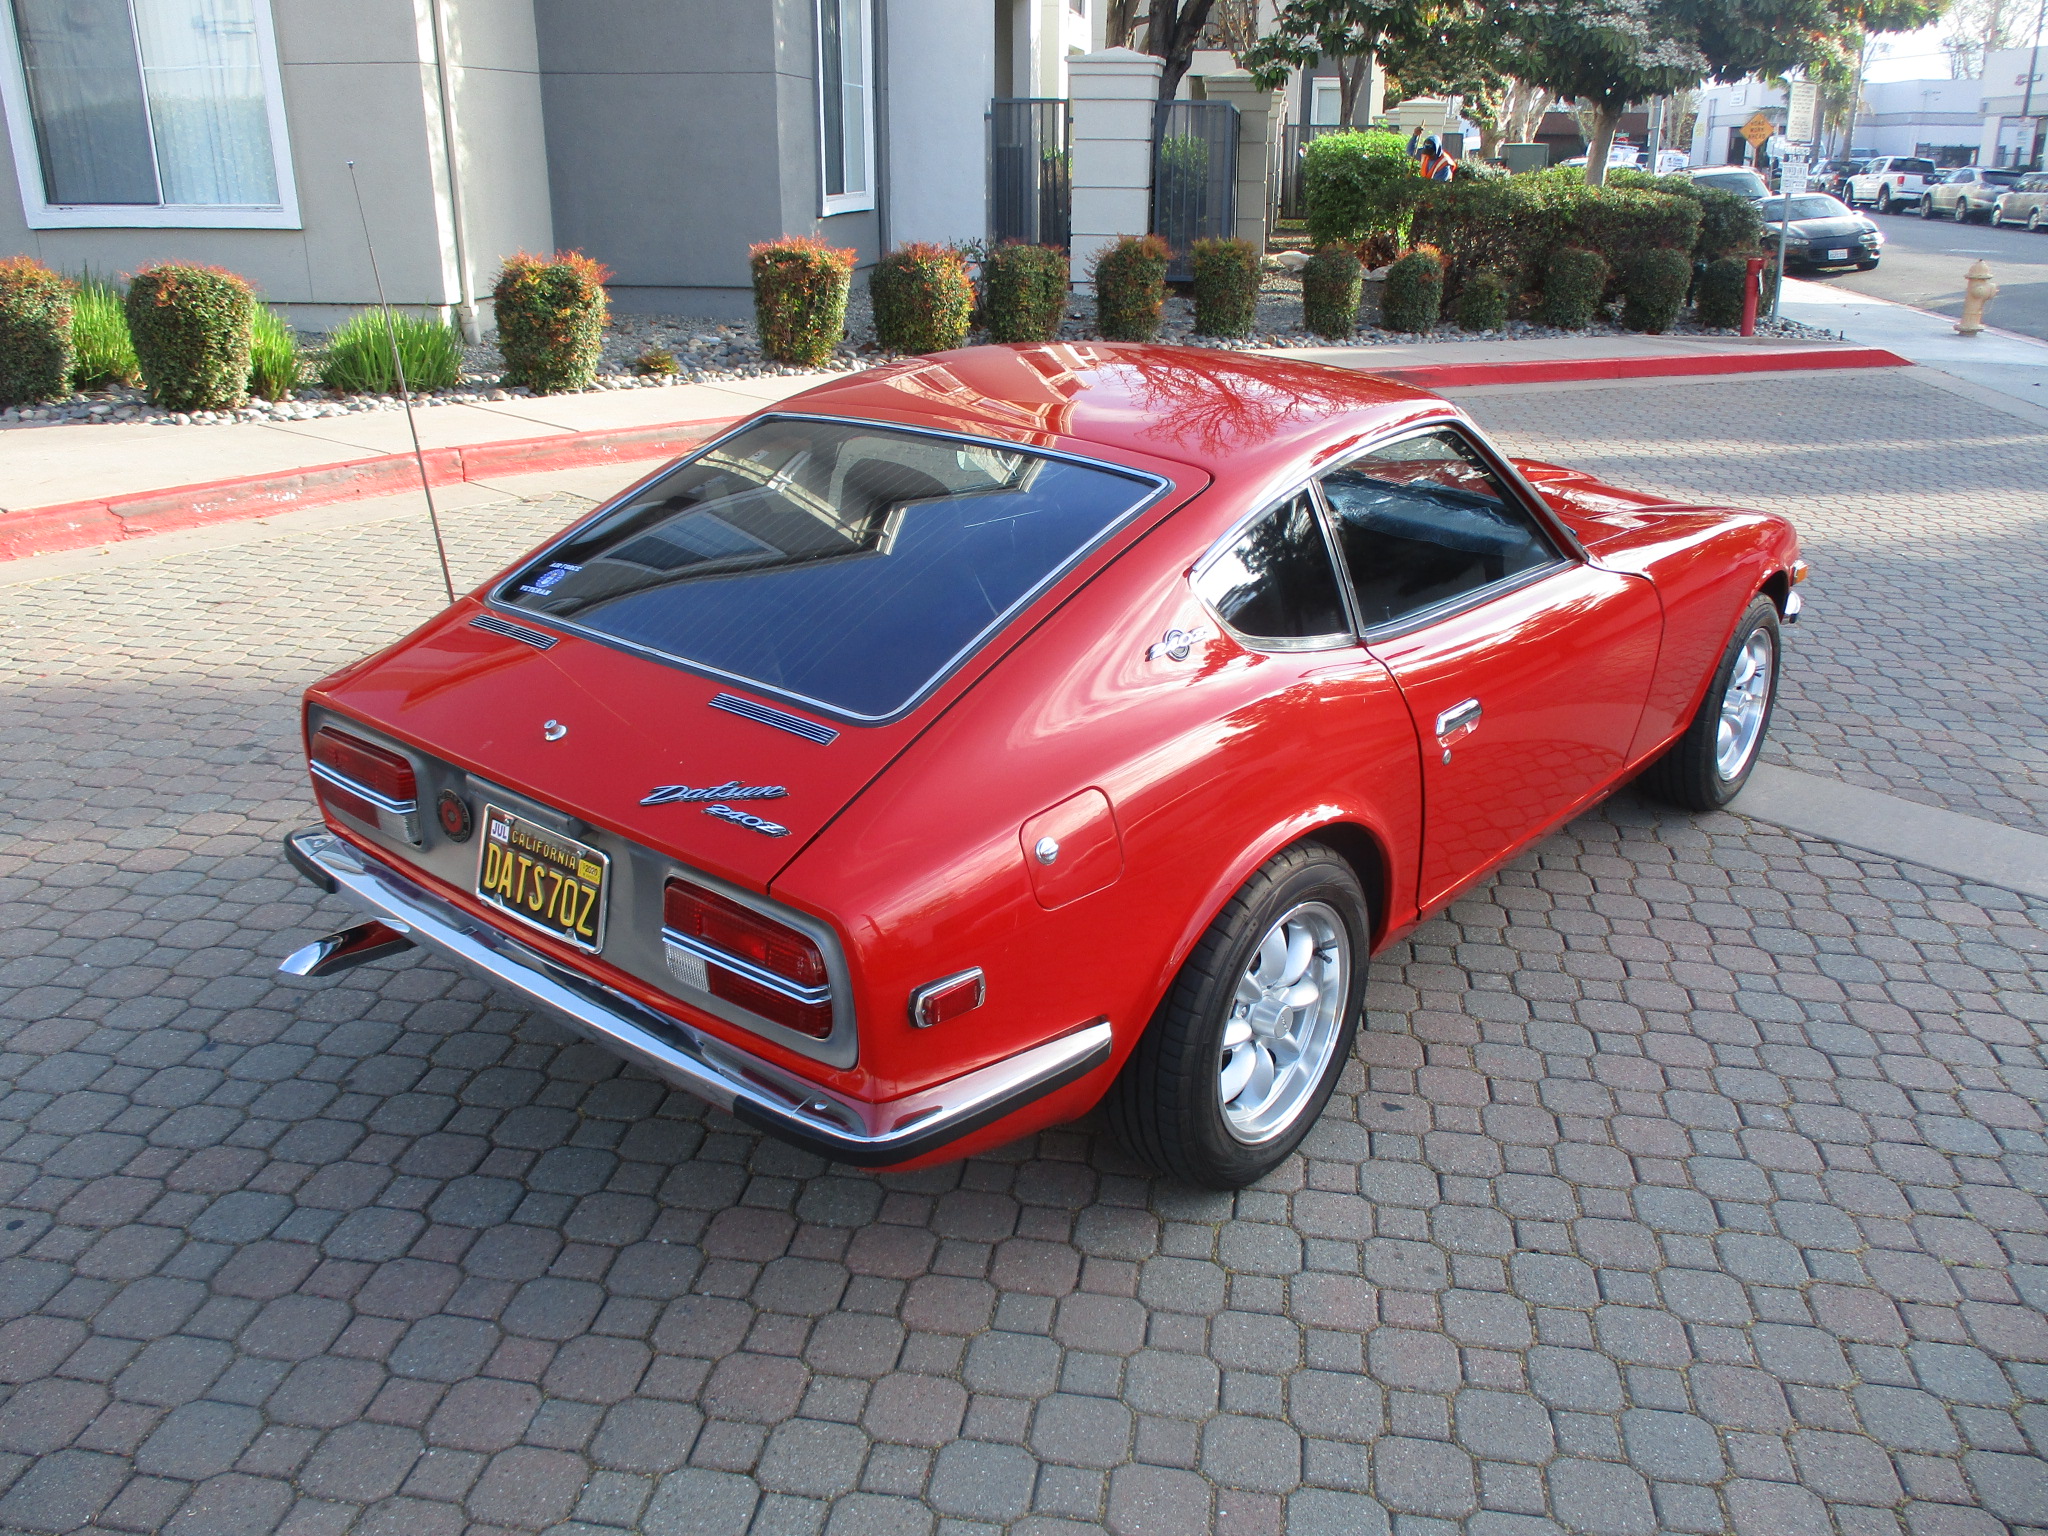 1970 Datsun 240Z Beverly Hills Car Club, 59% OFF